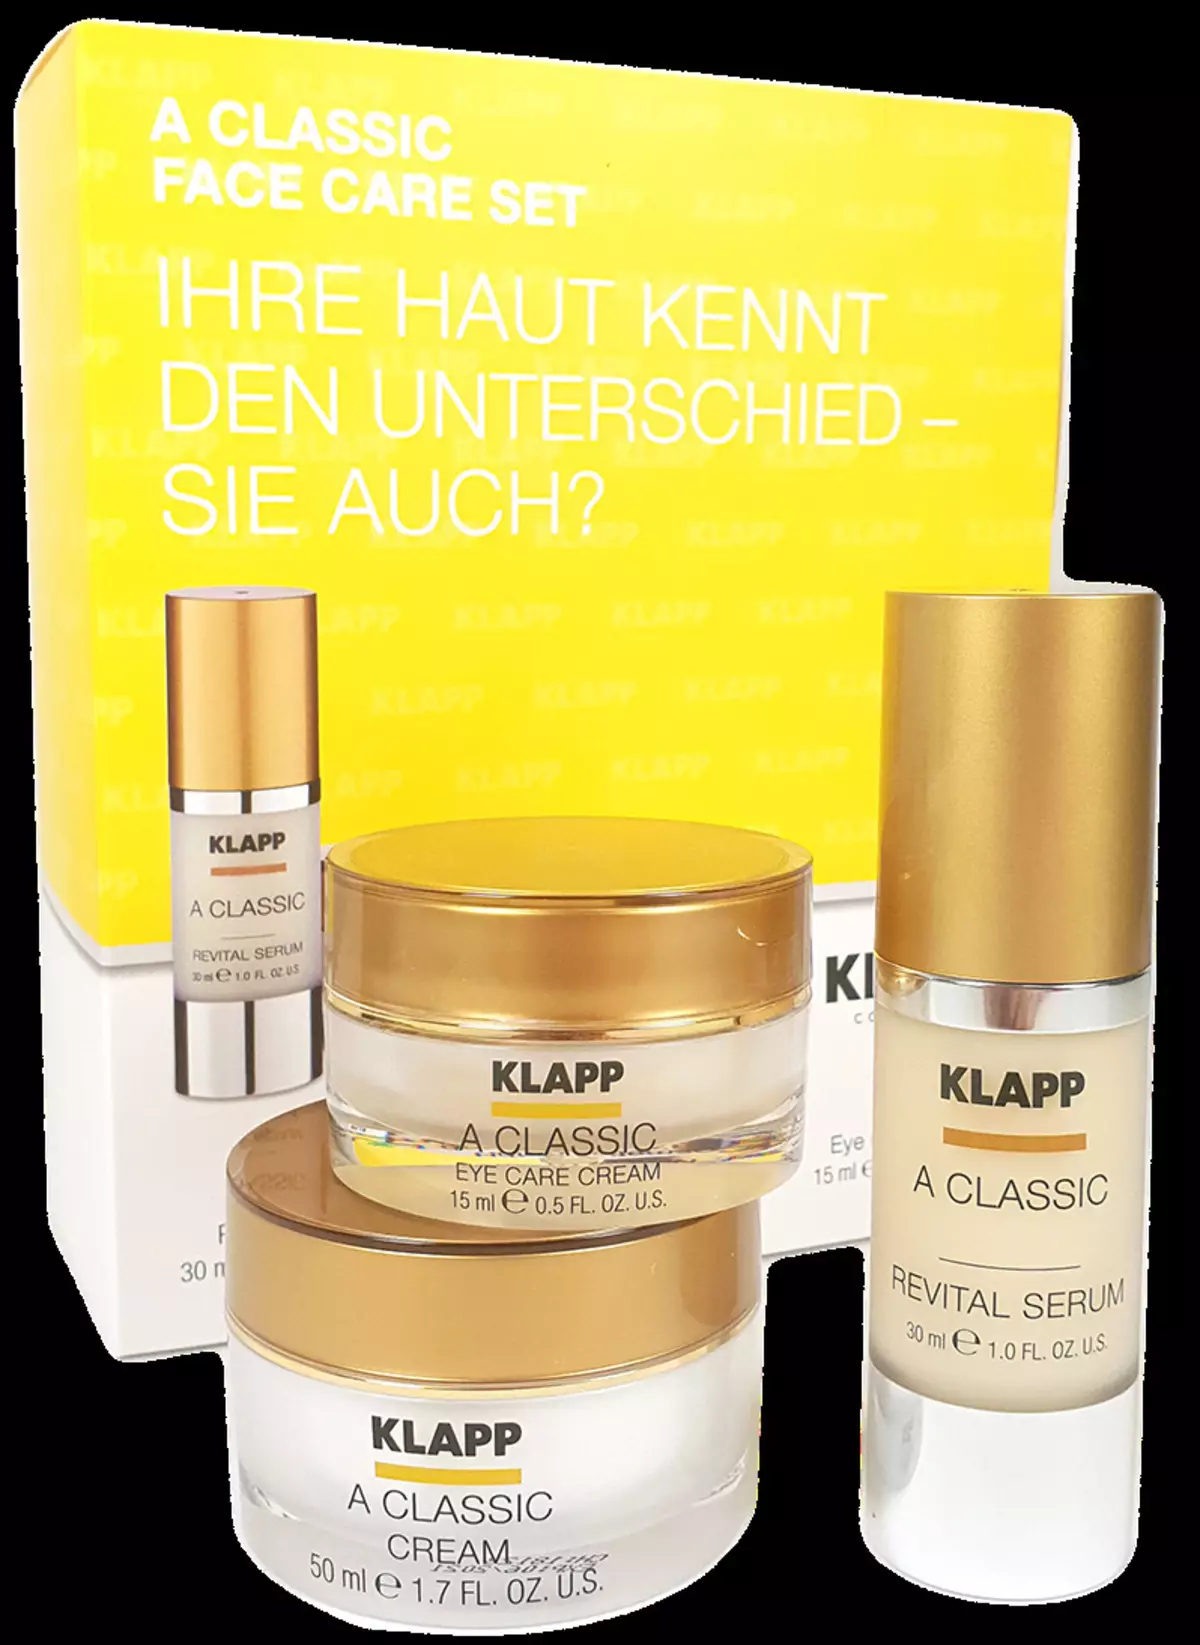 Kozmetika Klapp: Njemačka profesionalna kozmetika za lice i tijelo, recenzije kozmetičara 4661_29